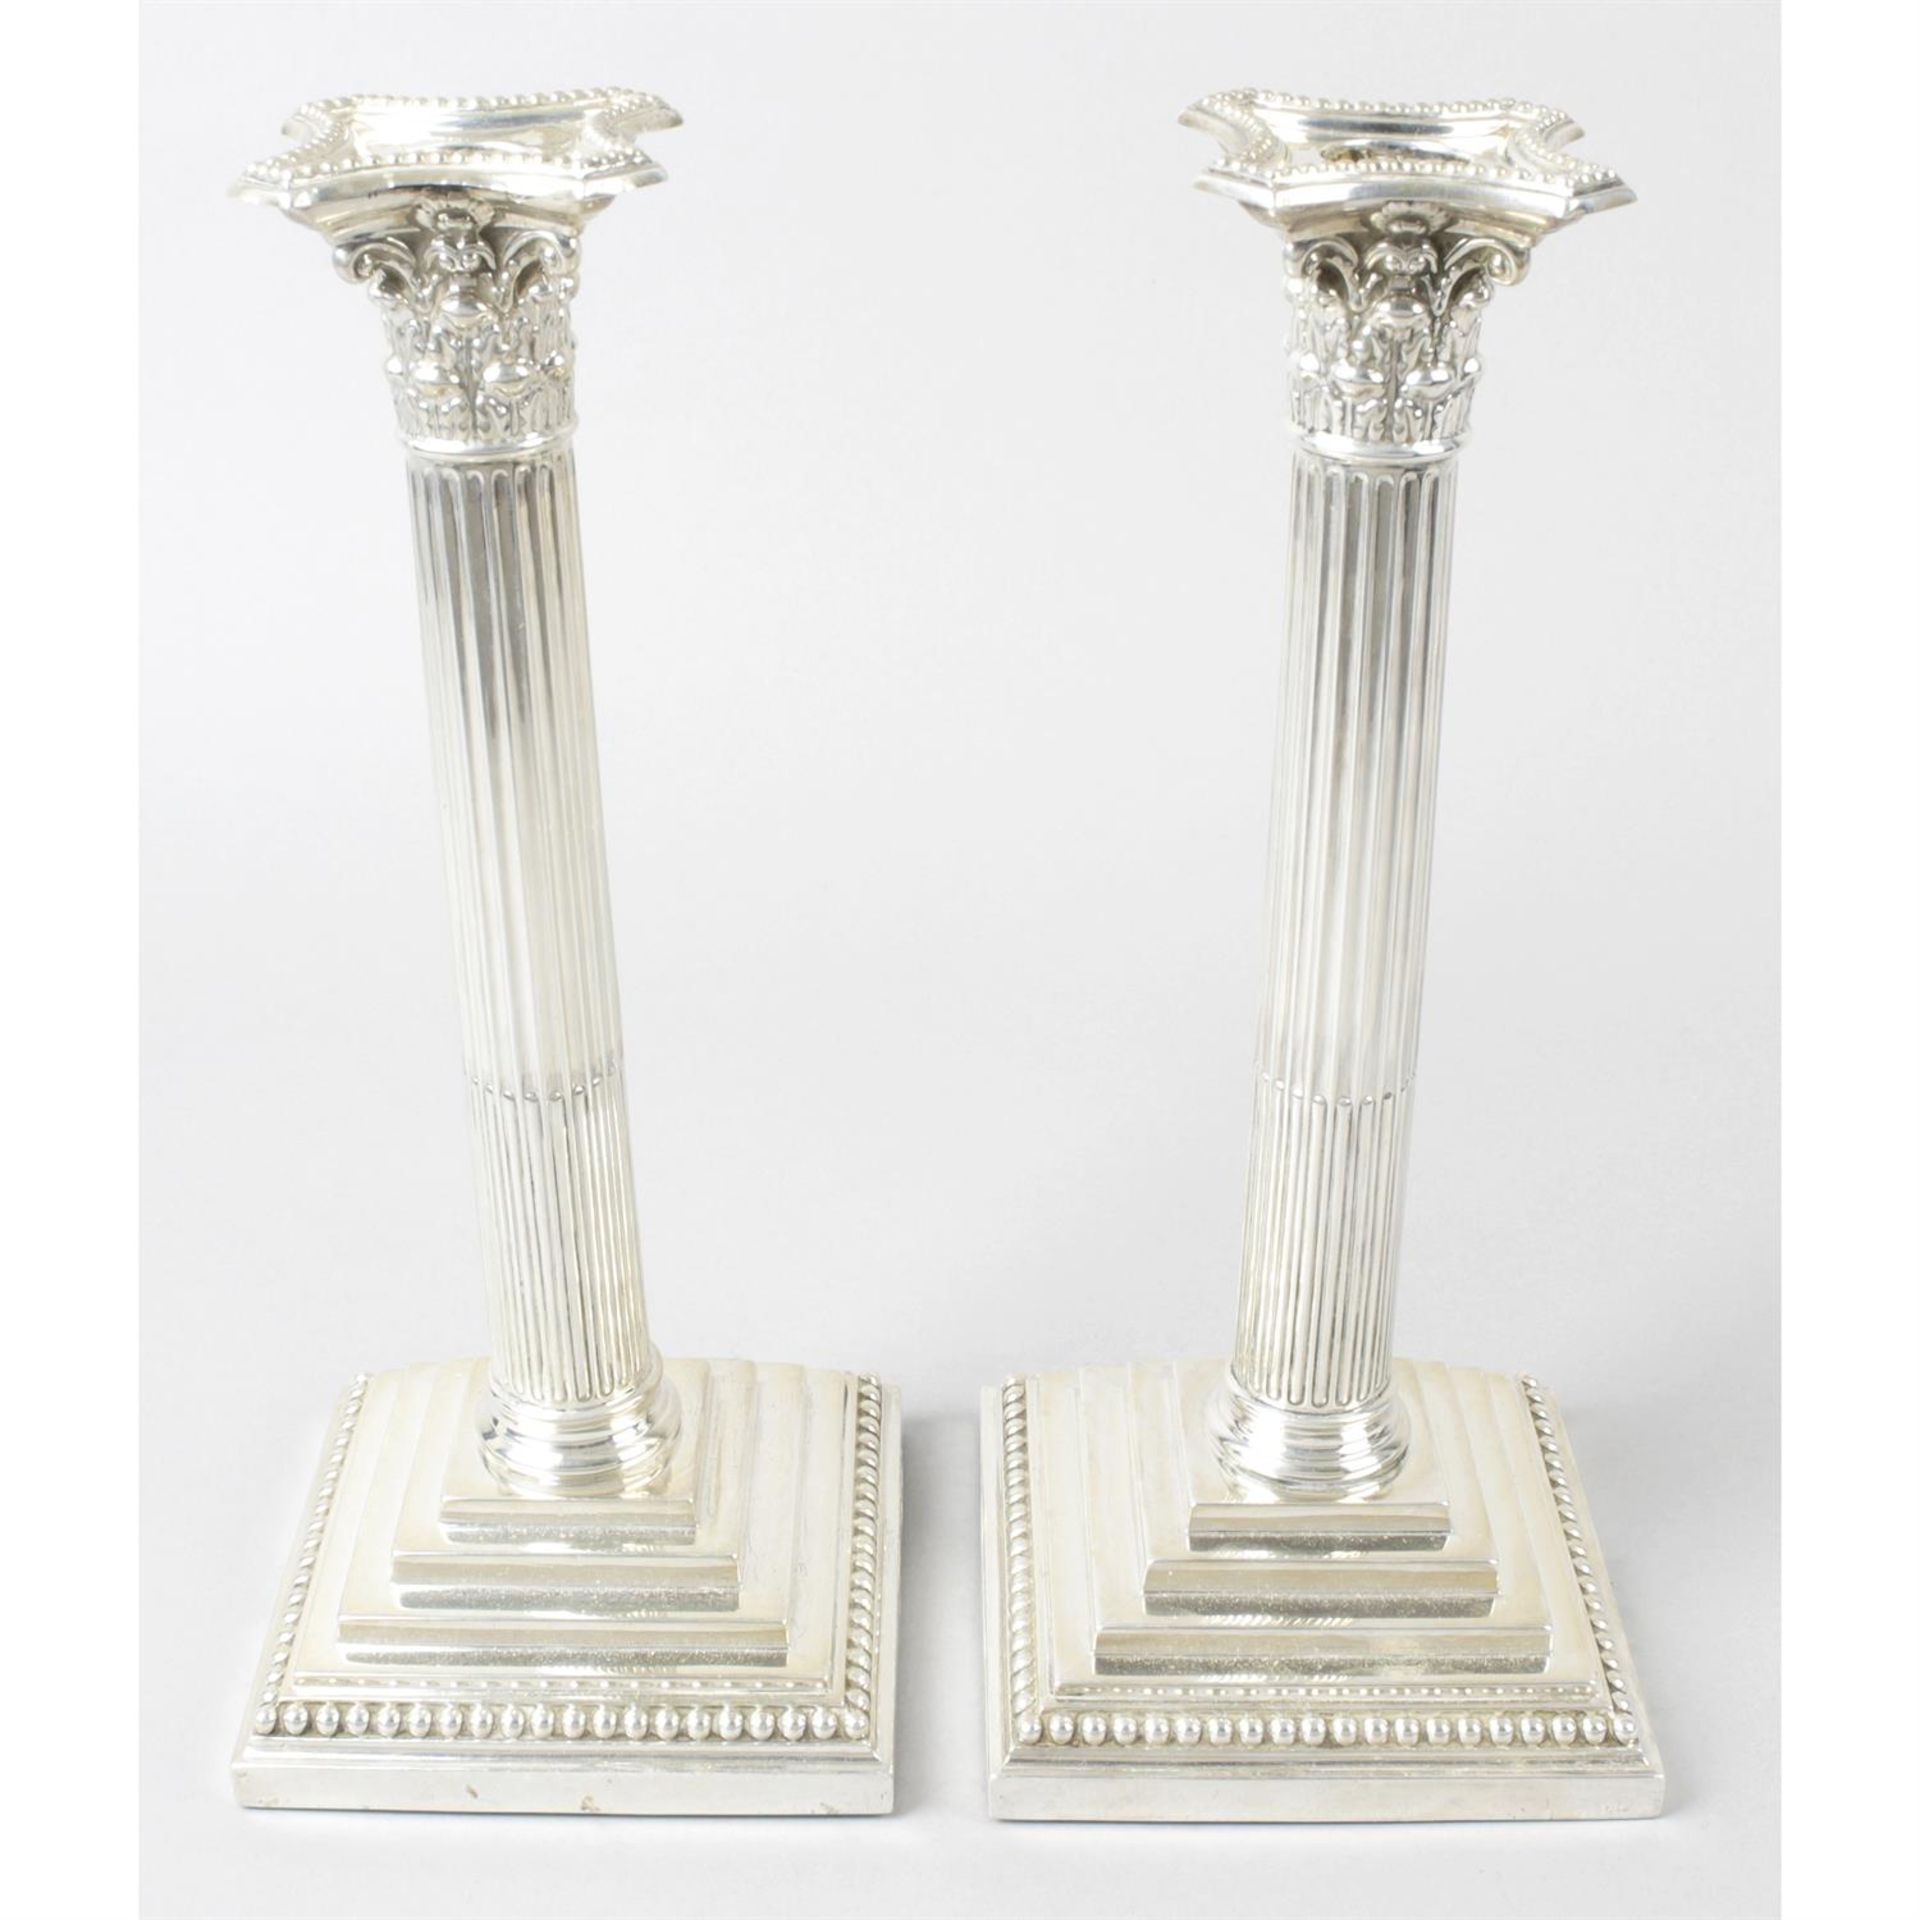 A pair of Edwardian silver Corinthian column candlesticks.